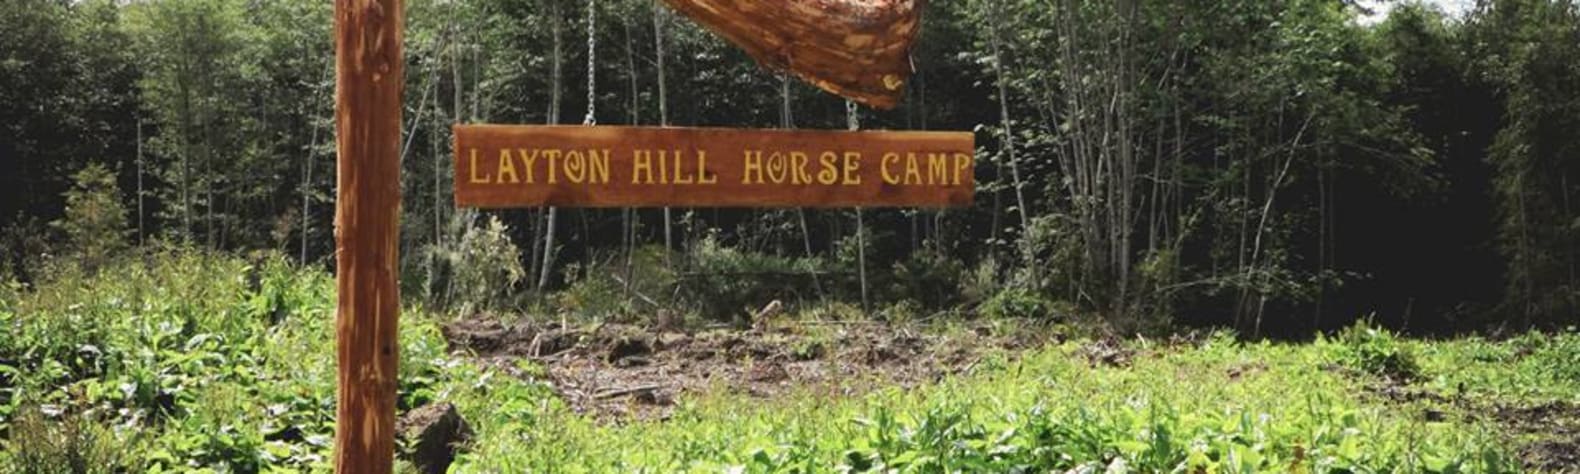 Layton Hill Horse Camp.